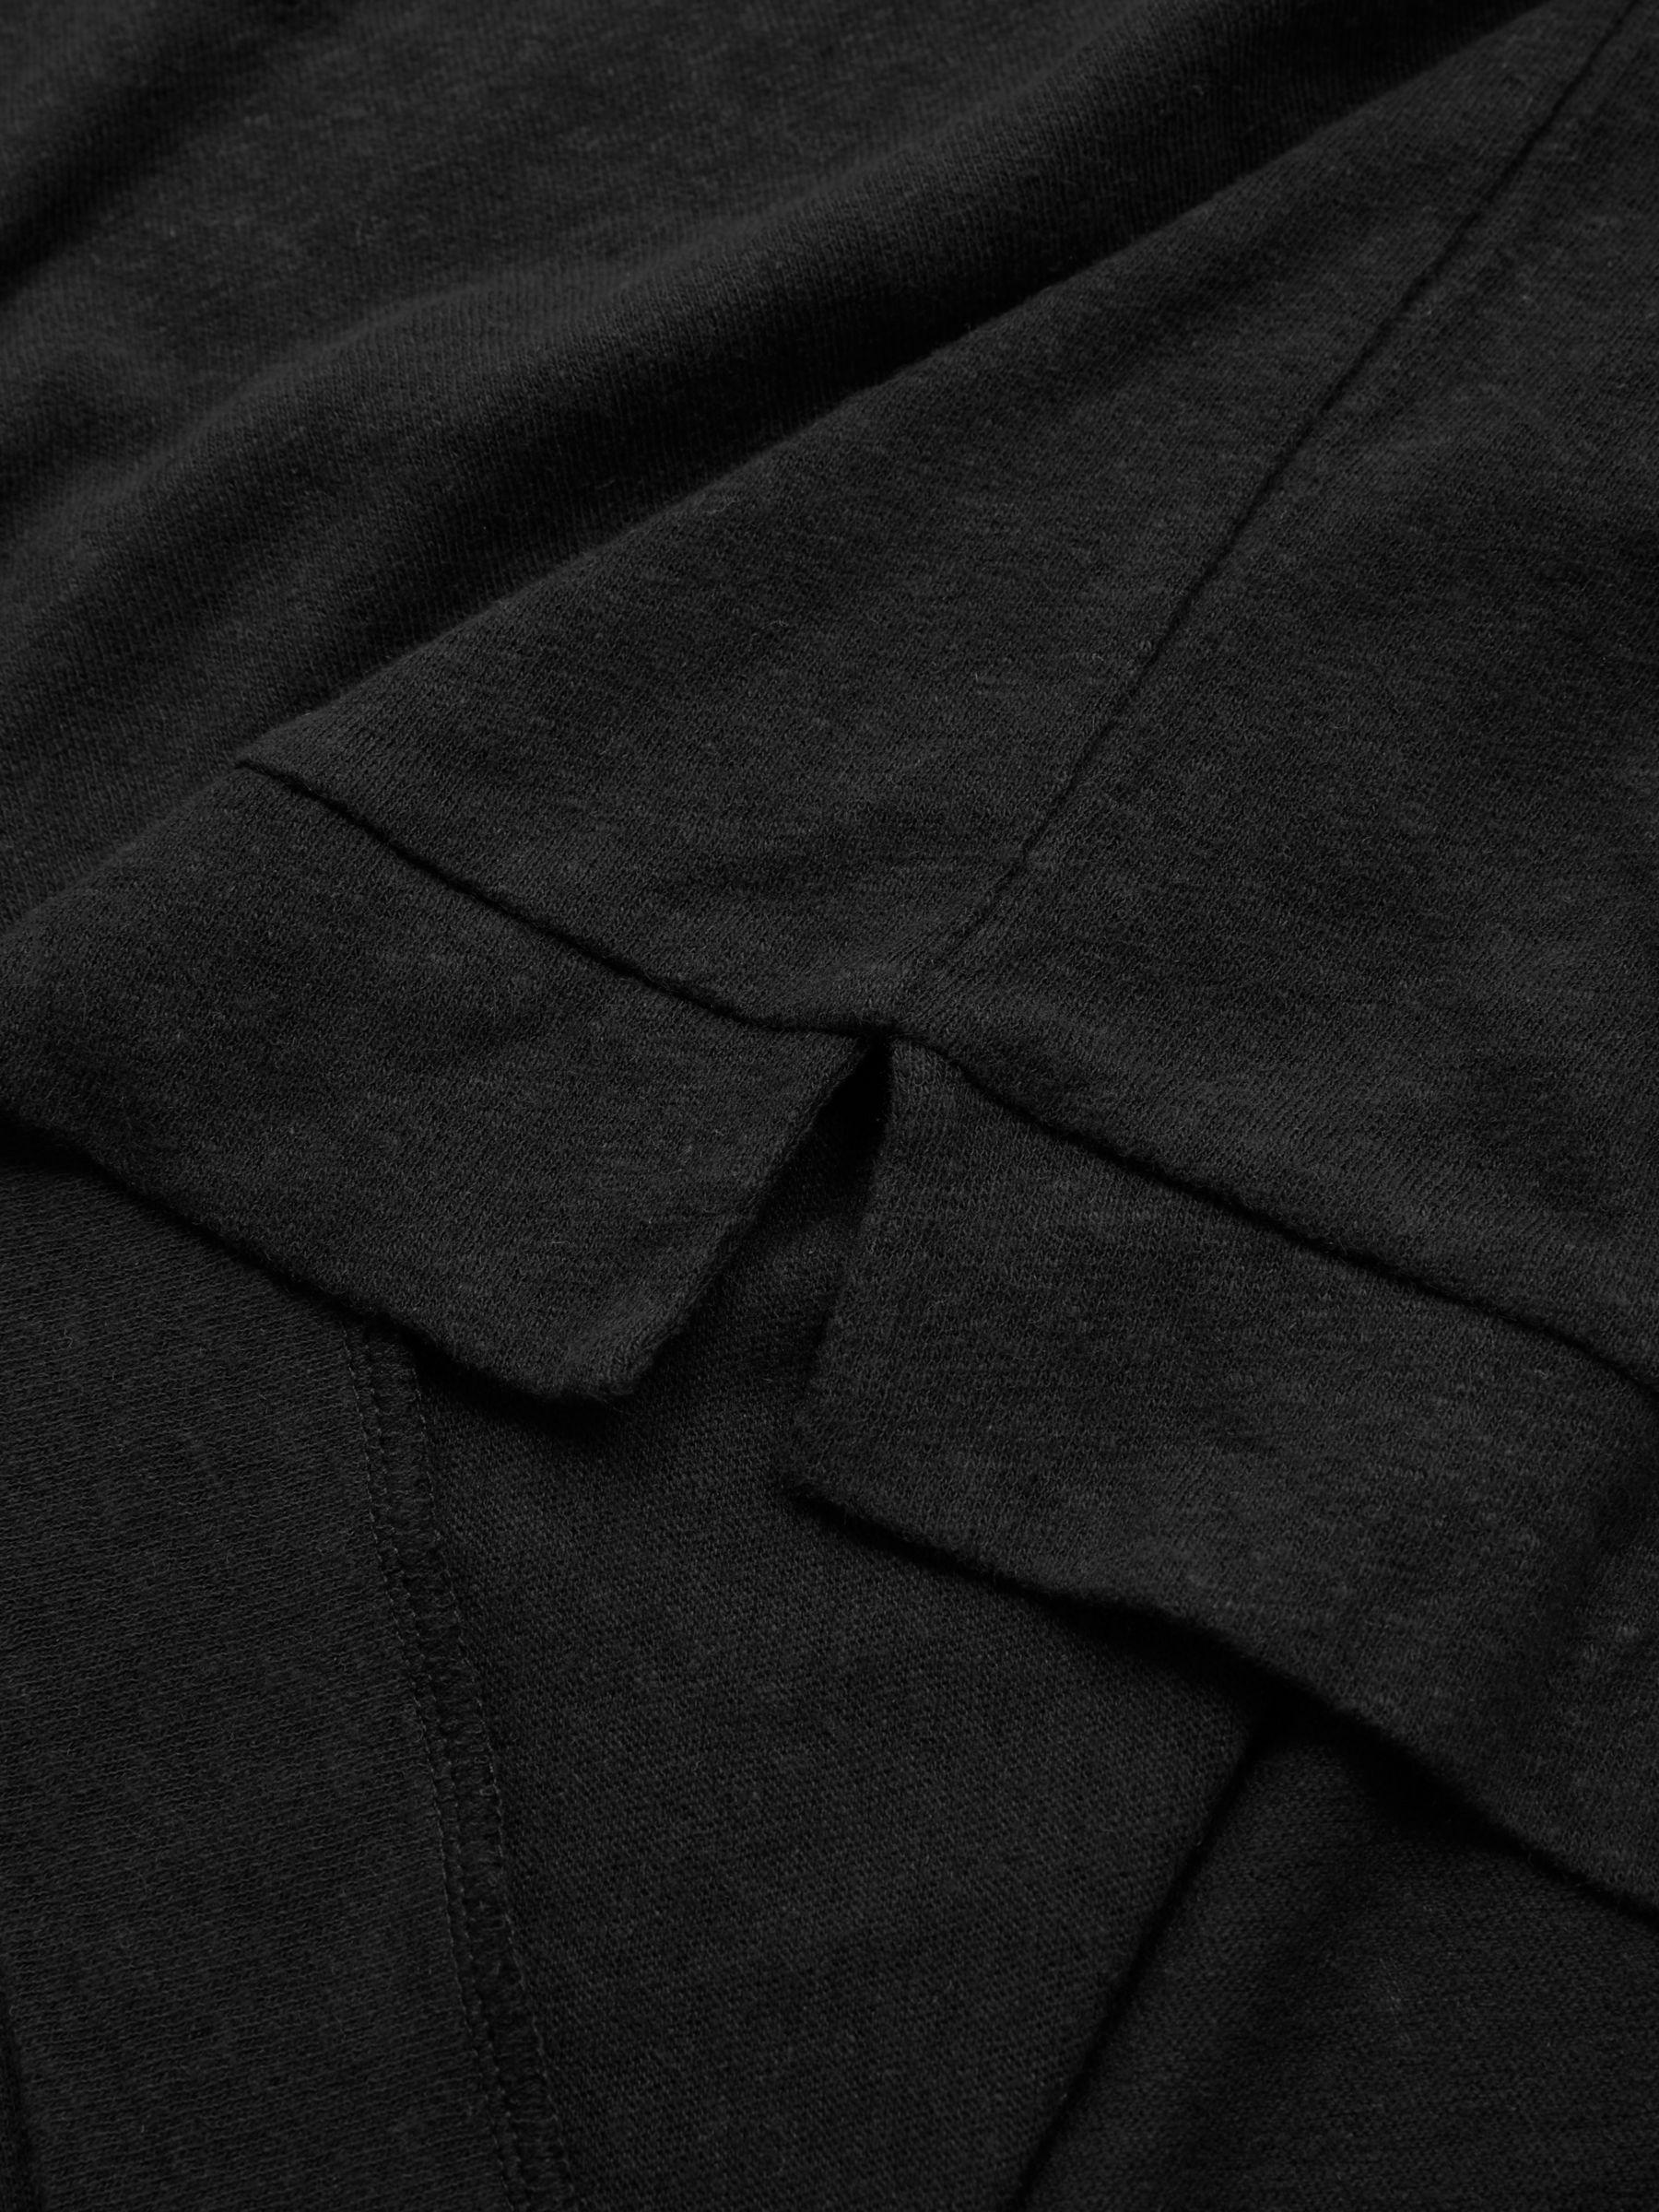 Celtic & Co. Linen Sweatshirt, Black at John Lewis & Partners